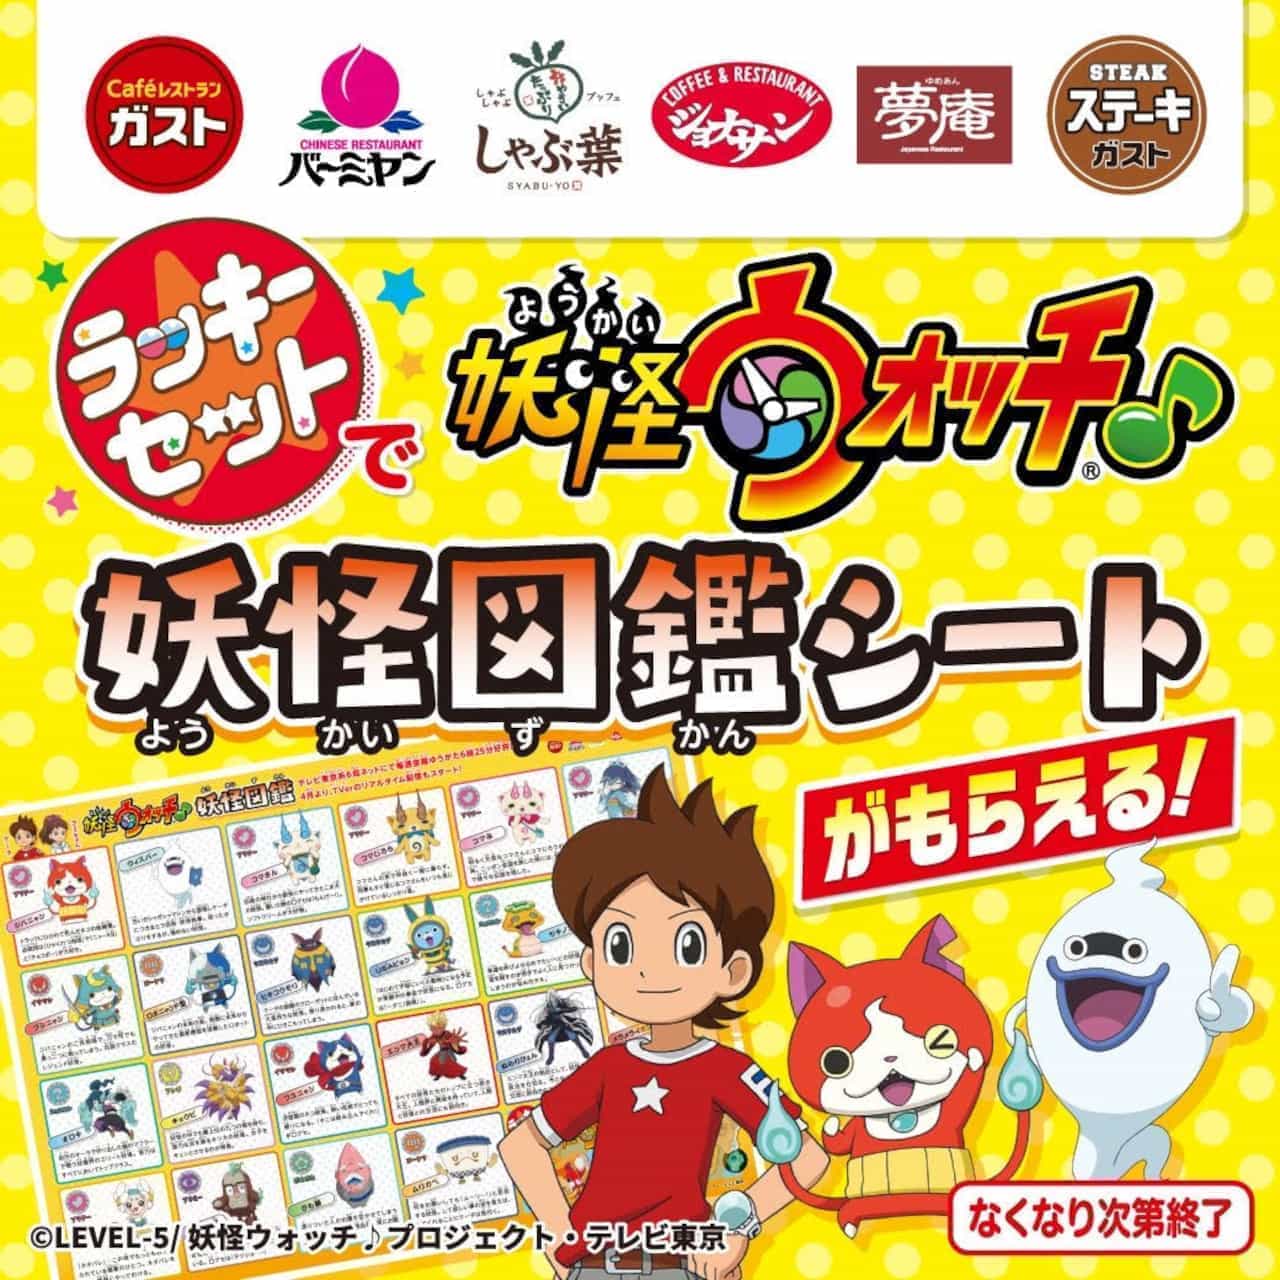 Gusto "＼Lucky set target/Yokai Watch♪ Yokai Zukan Sheet Present" campaign